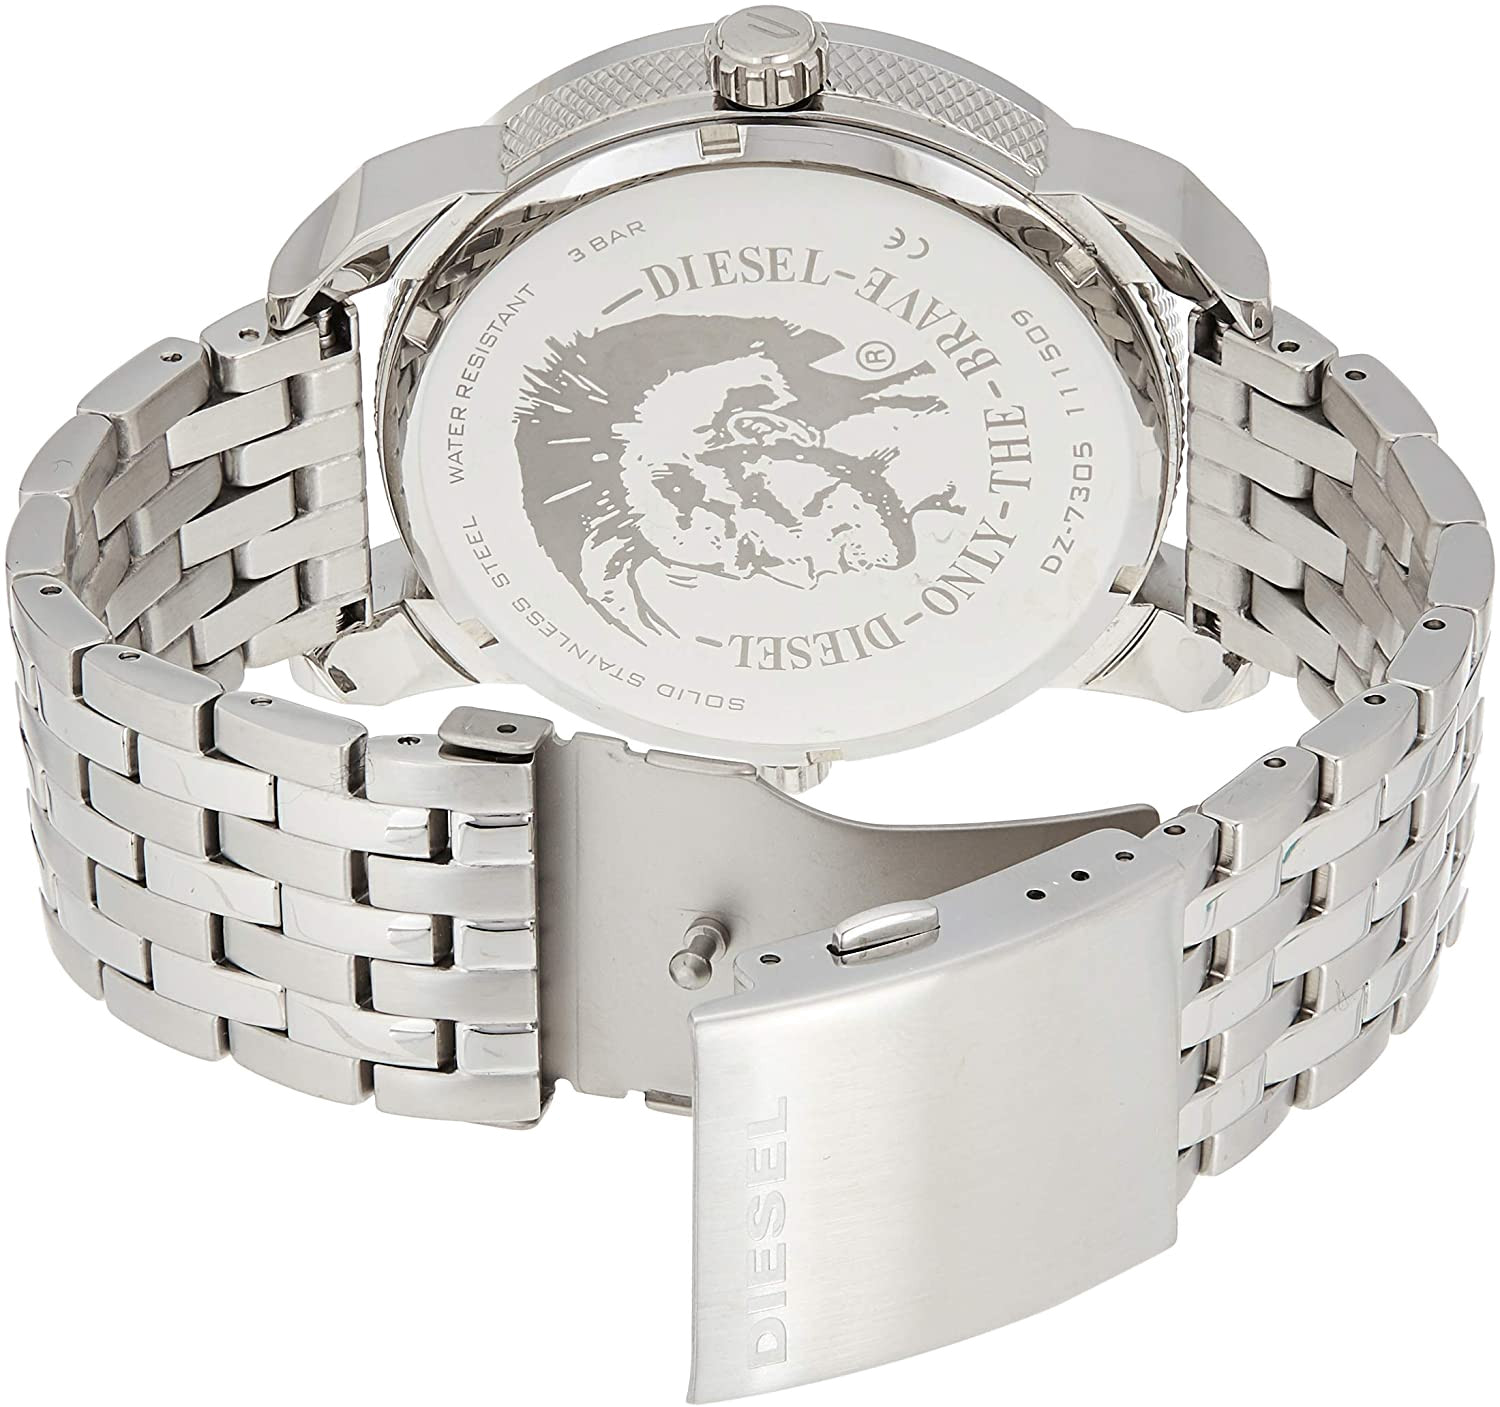 Diesel Mini Daddy Dual Time Silver Dial Silver Steel Watch For Men - DZ7305